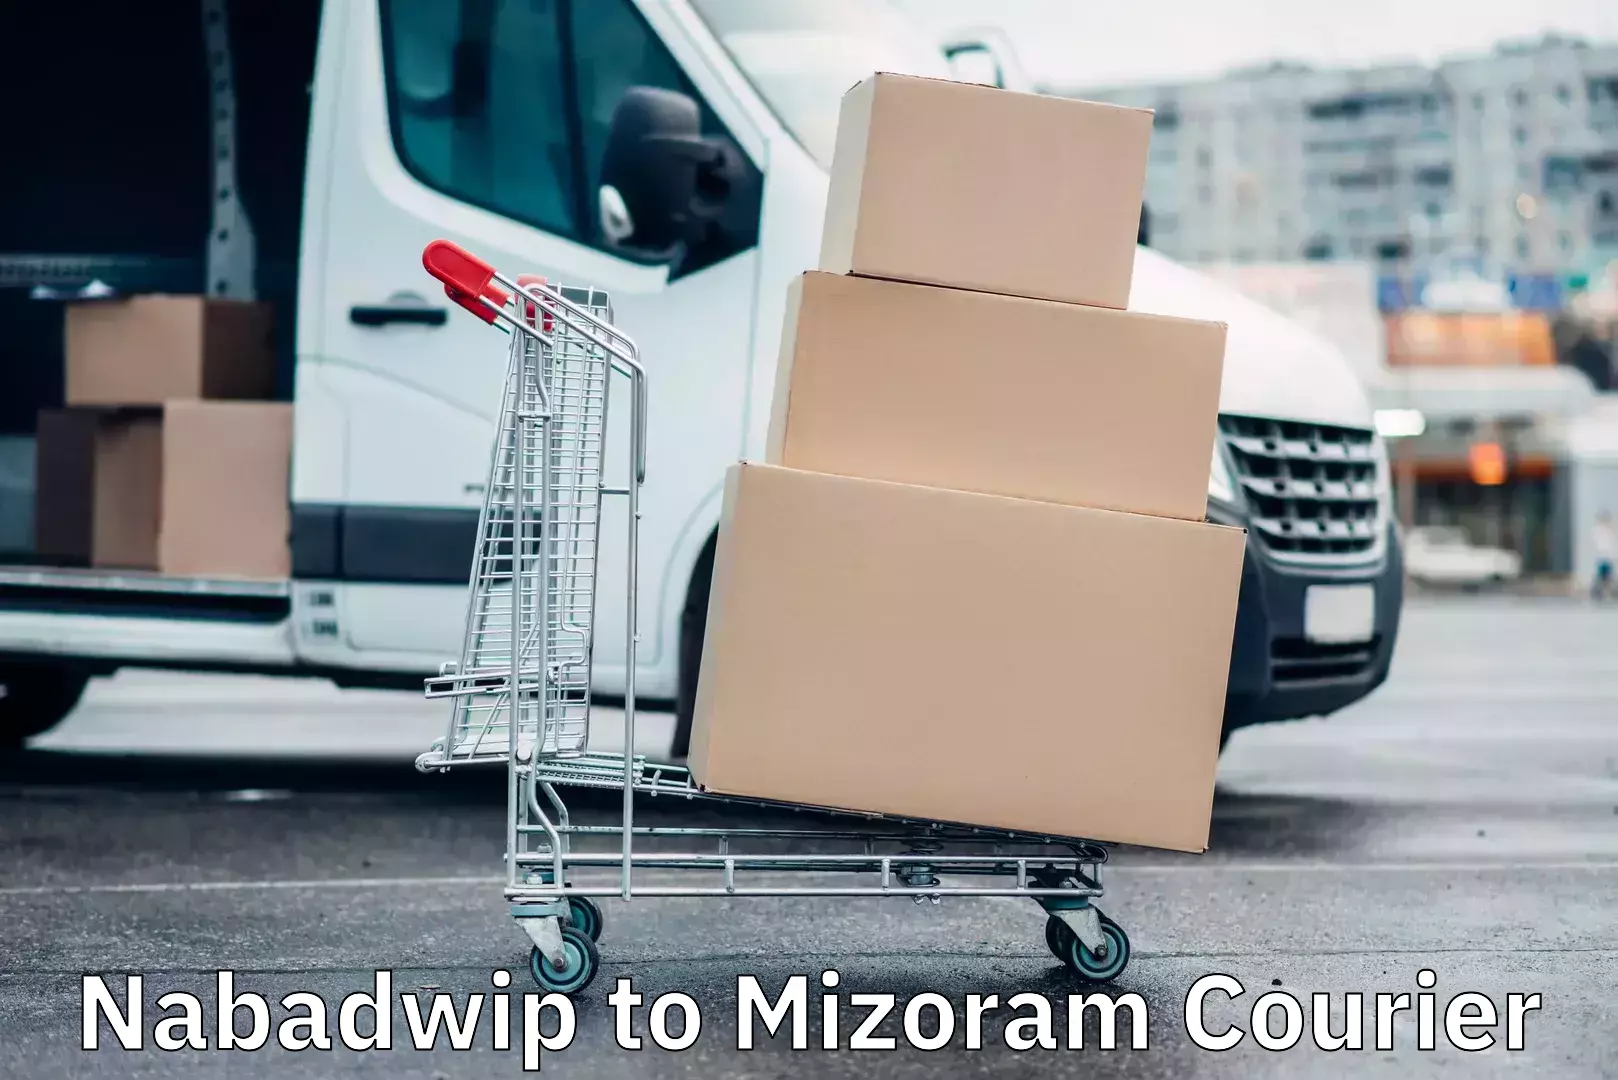 Customer-centric shipping Nabadwip to Mizoram